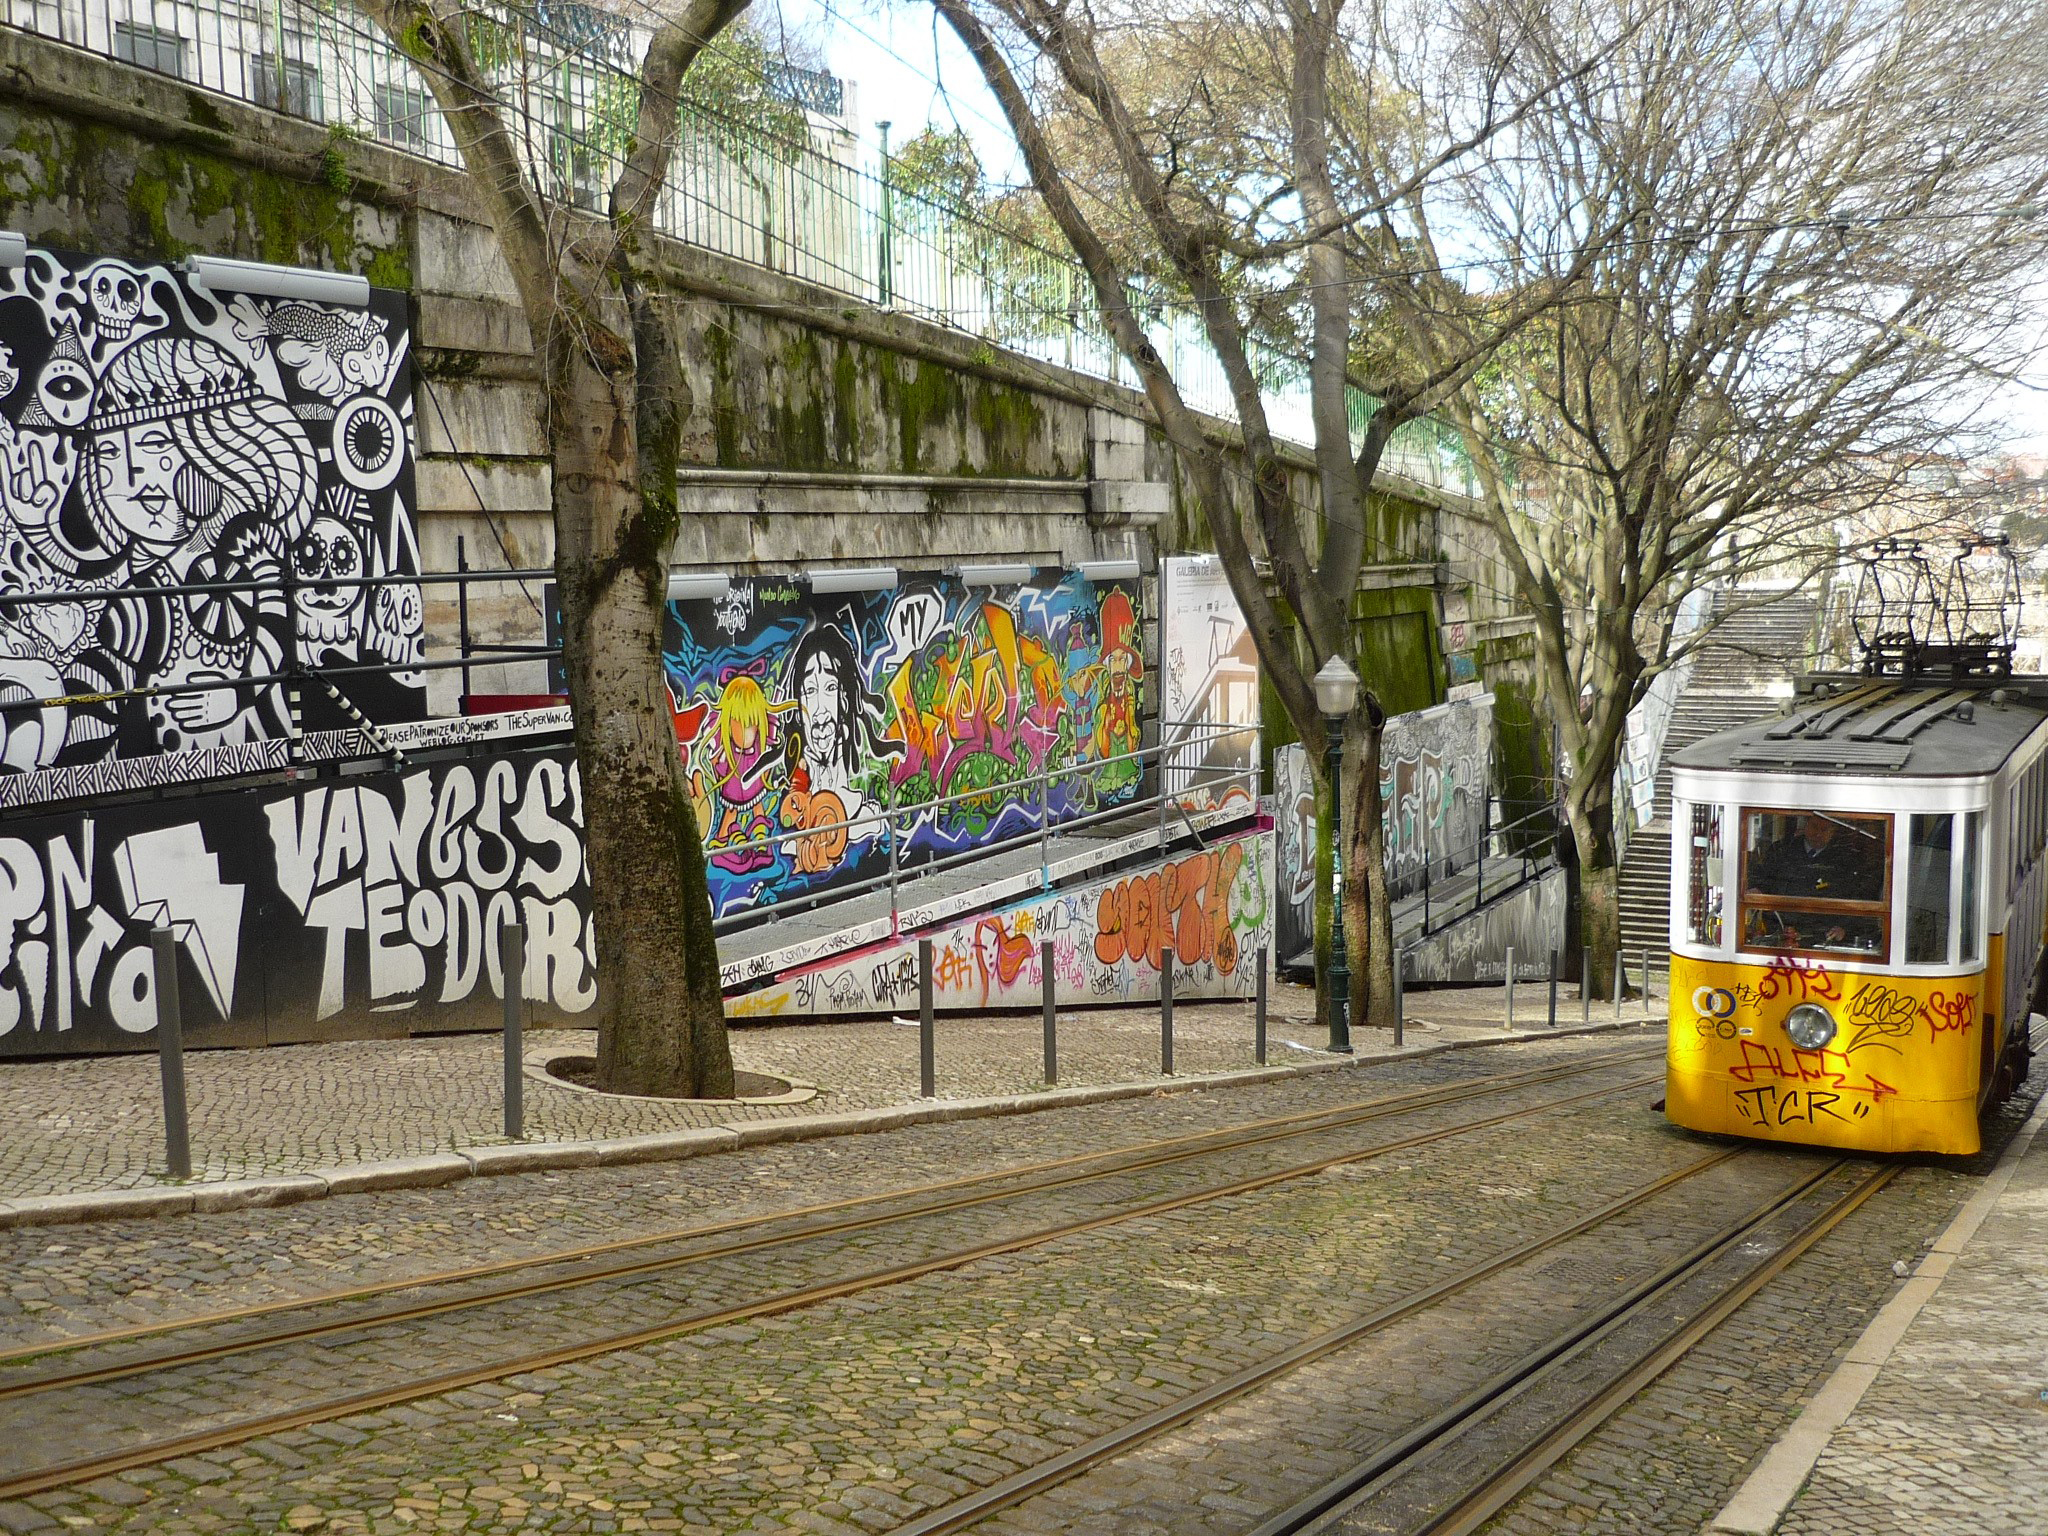 Vehicles Tram HD Wallpaper | Background Image